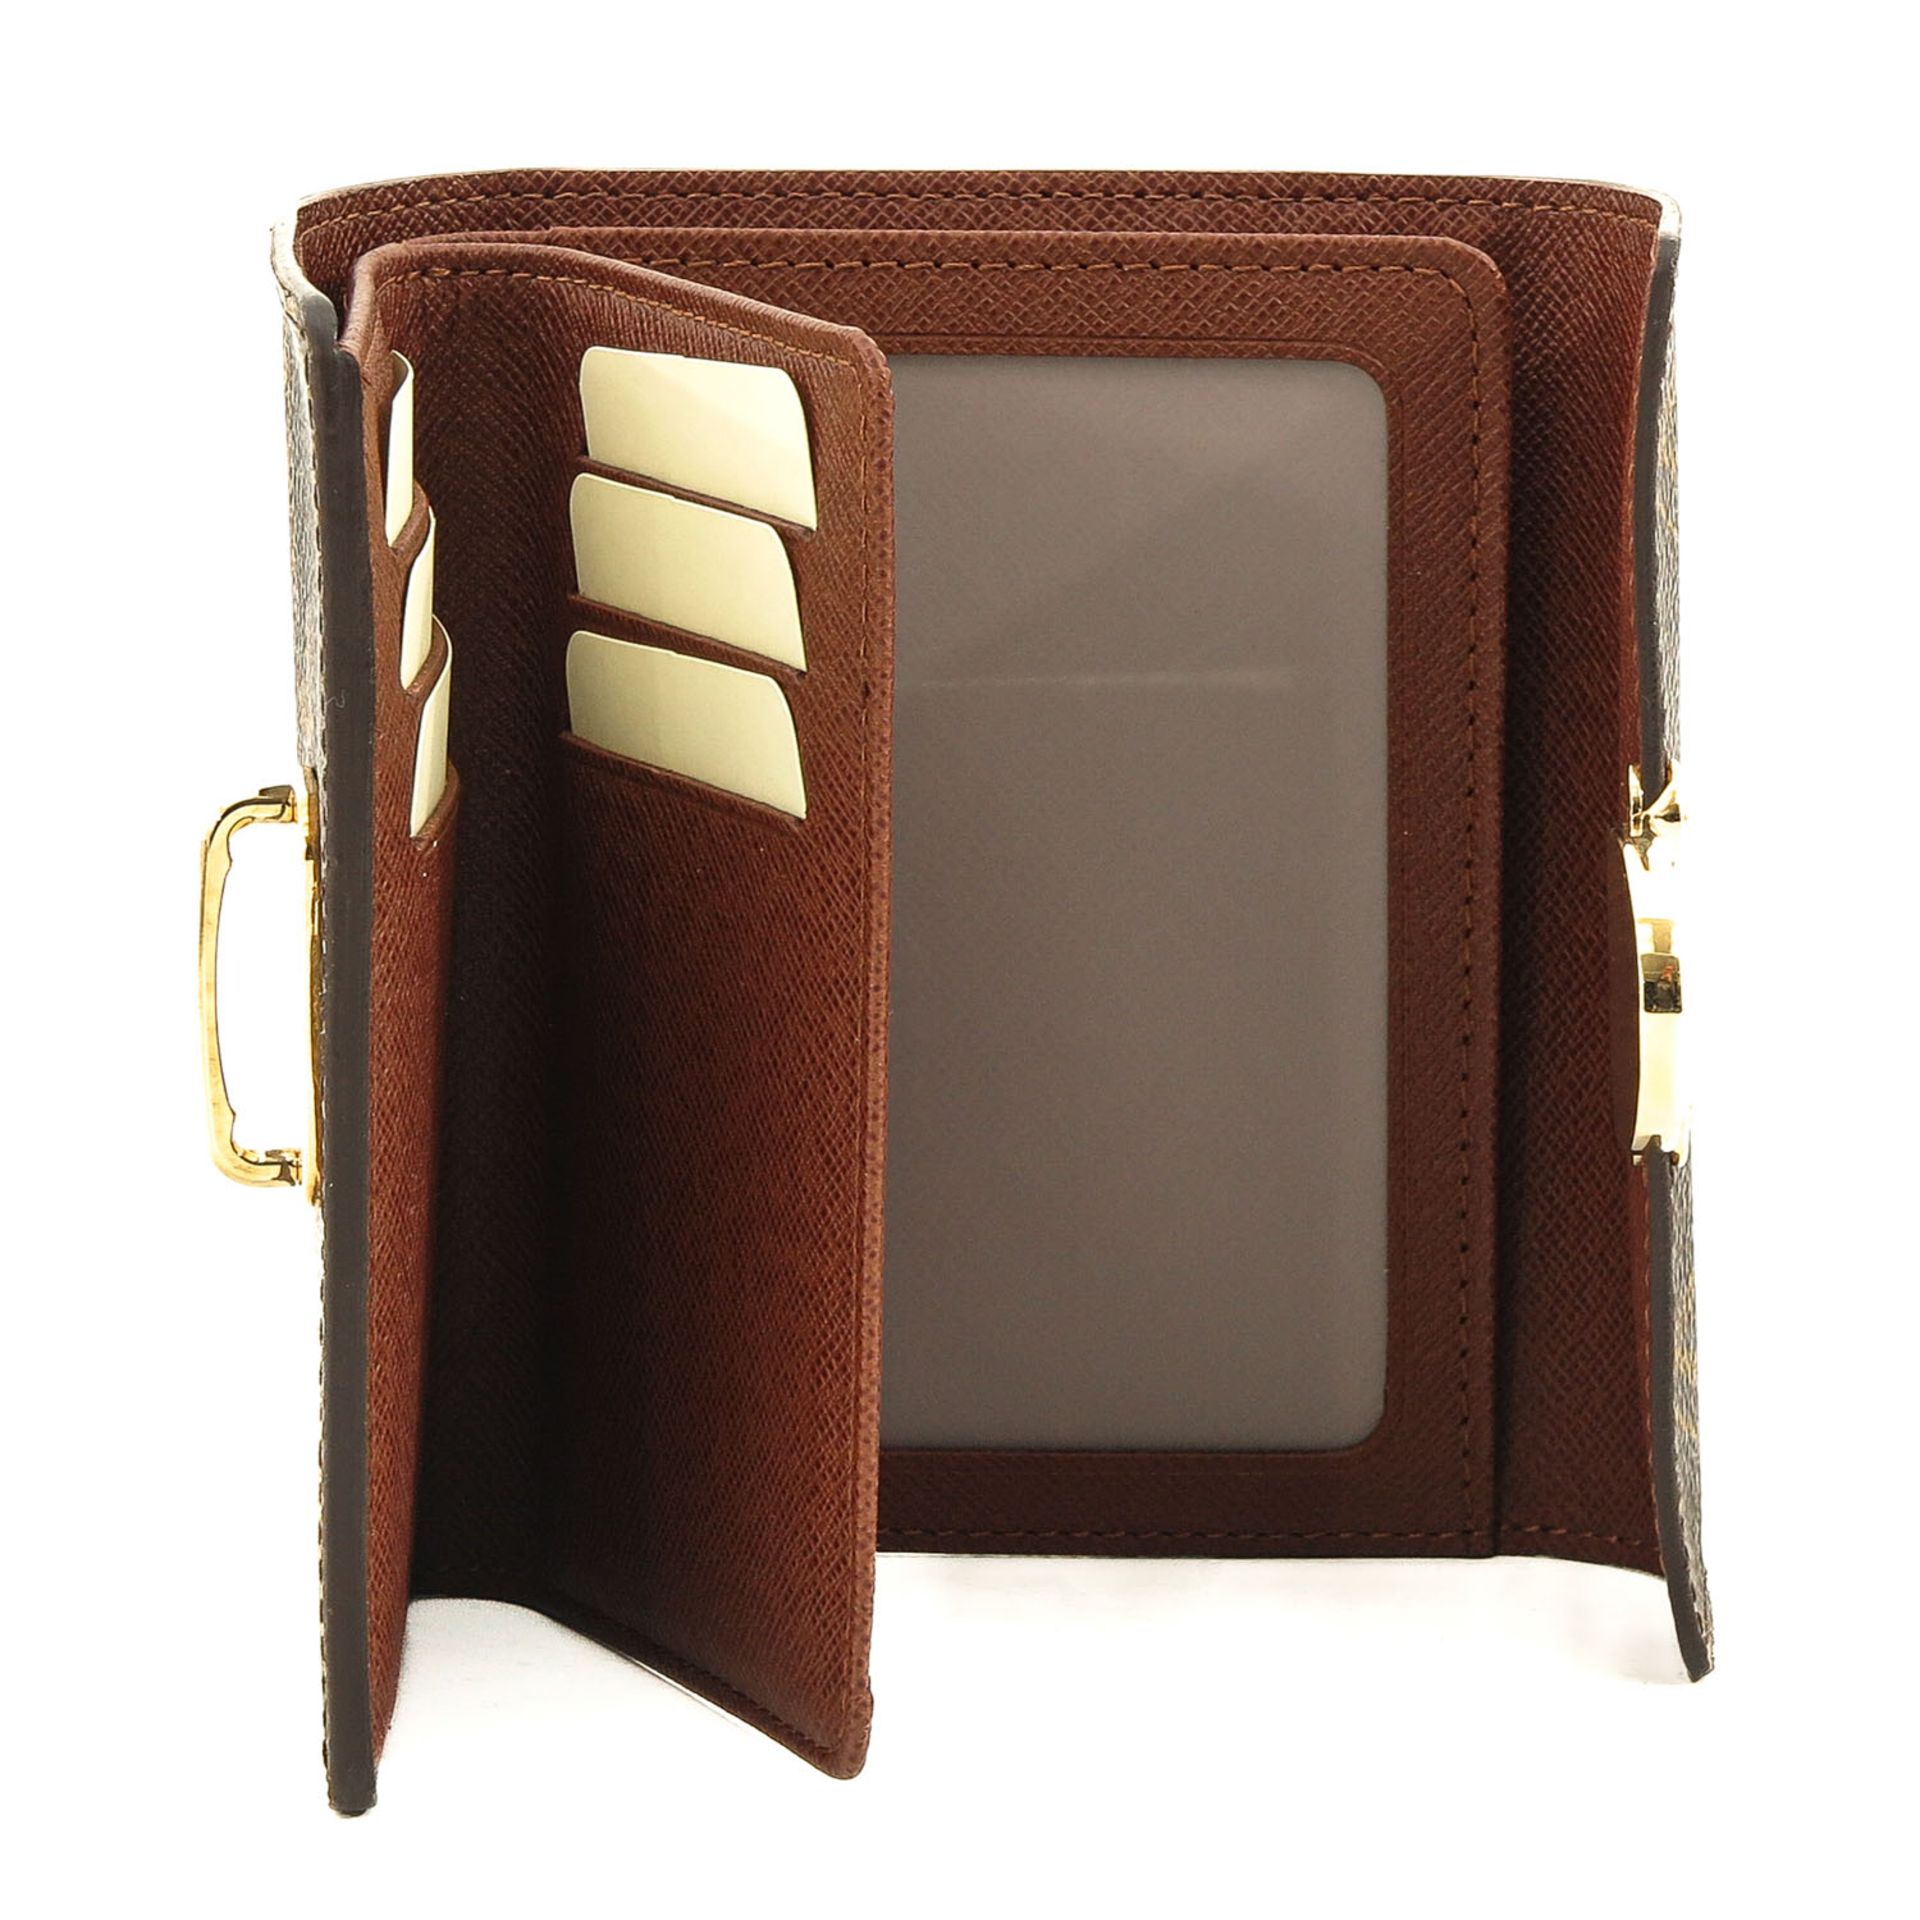 A Louis Vuiton Folding Wallet - Image 7 of 9